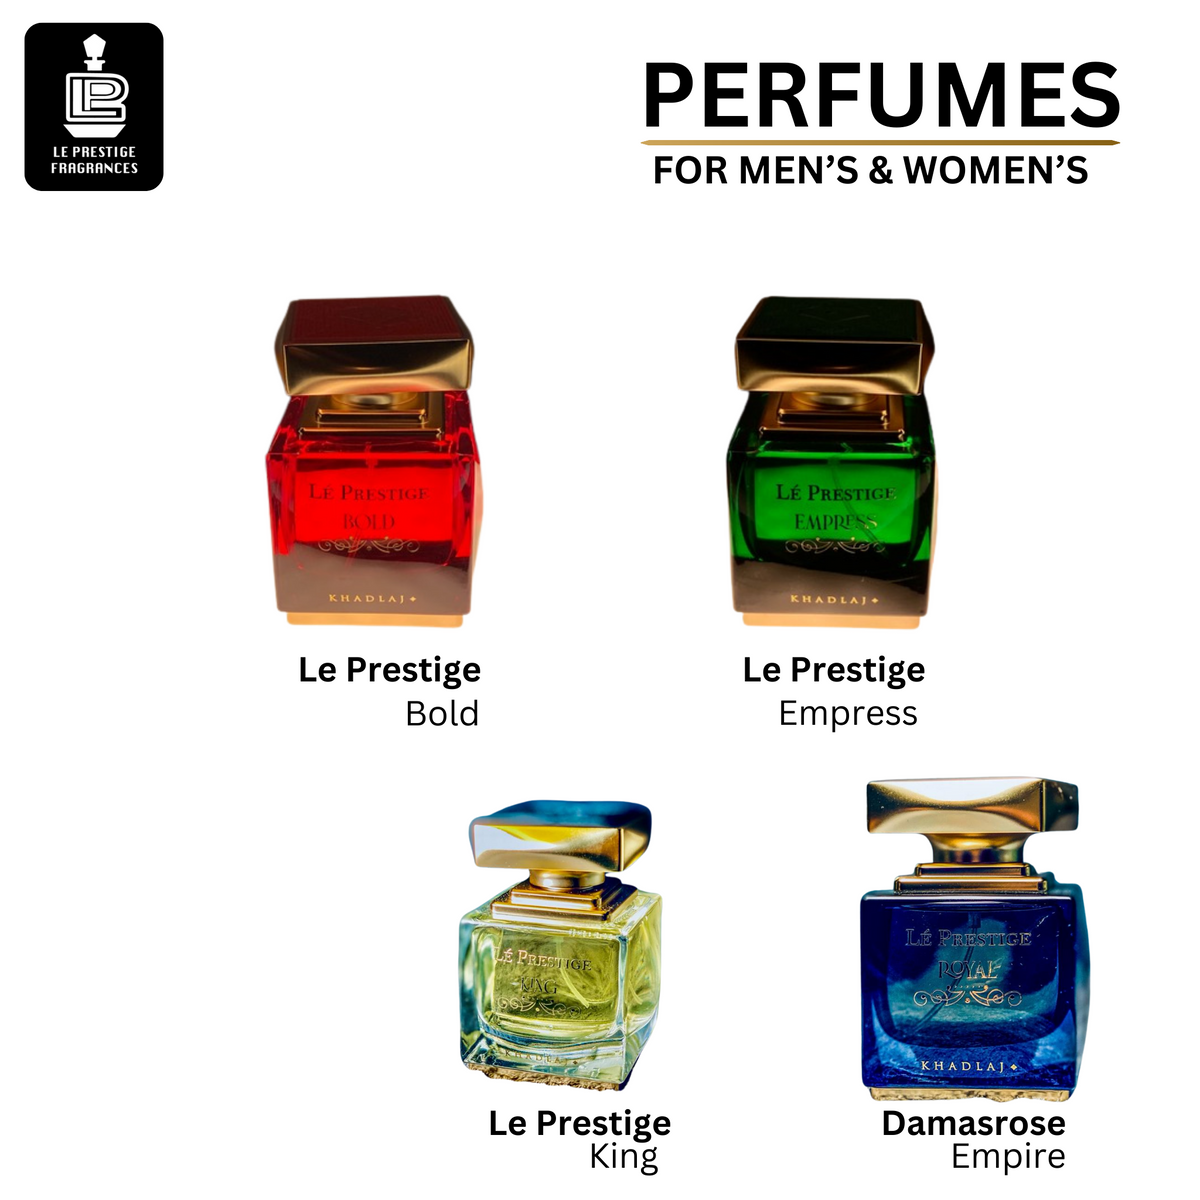 Le Prestige perfume 